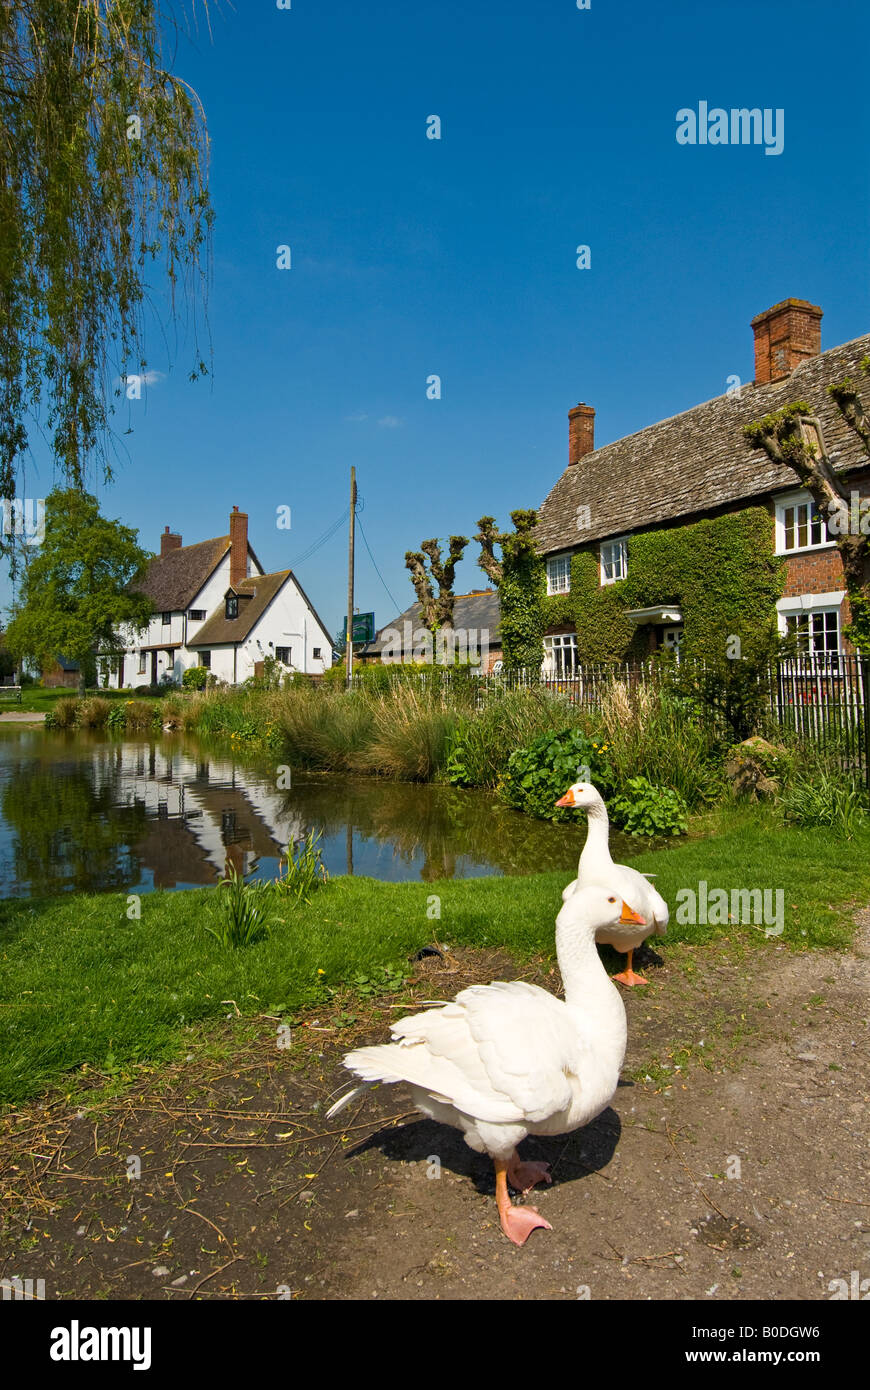 Village pond at Childrey, Oxfordshire, England Stock Photo